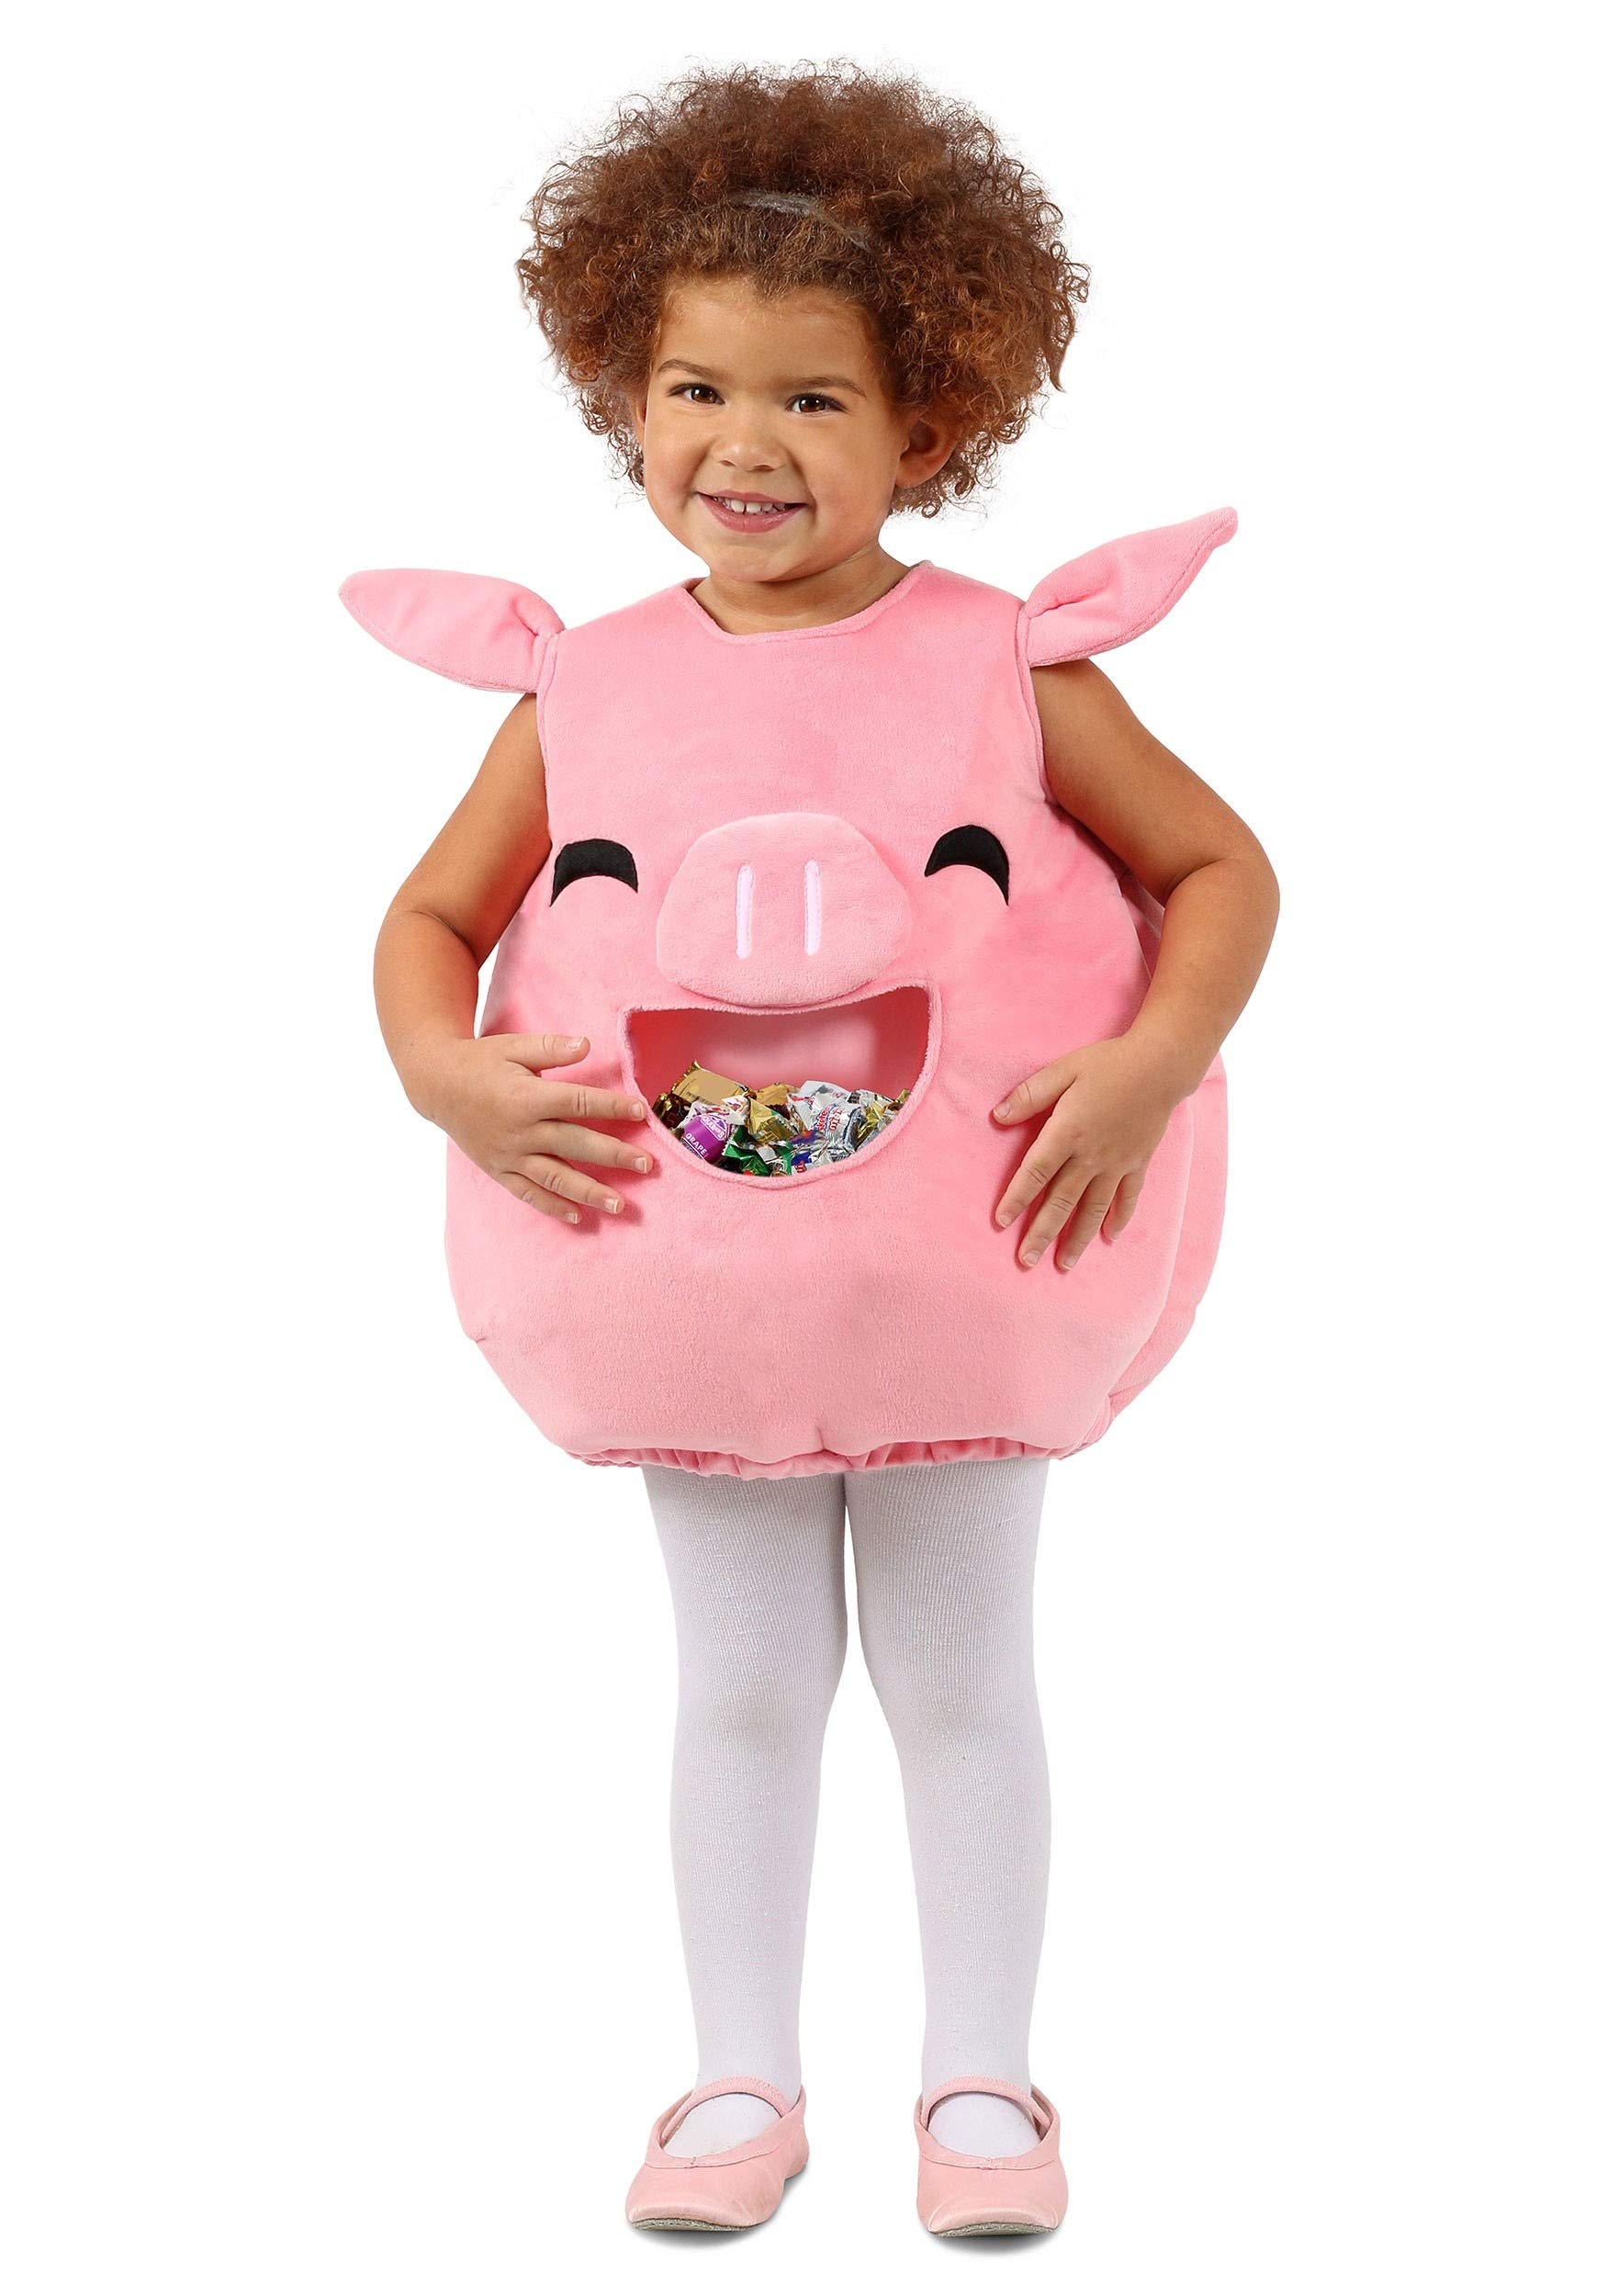 Princess Paradise Rubie's Child's Feed Me Piggy Costume, X-Small/Small